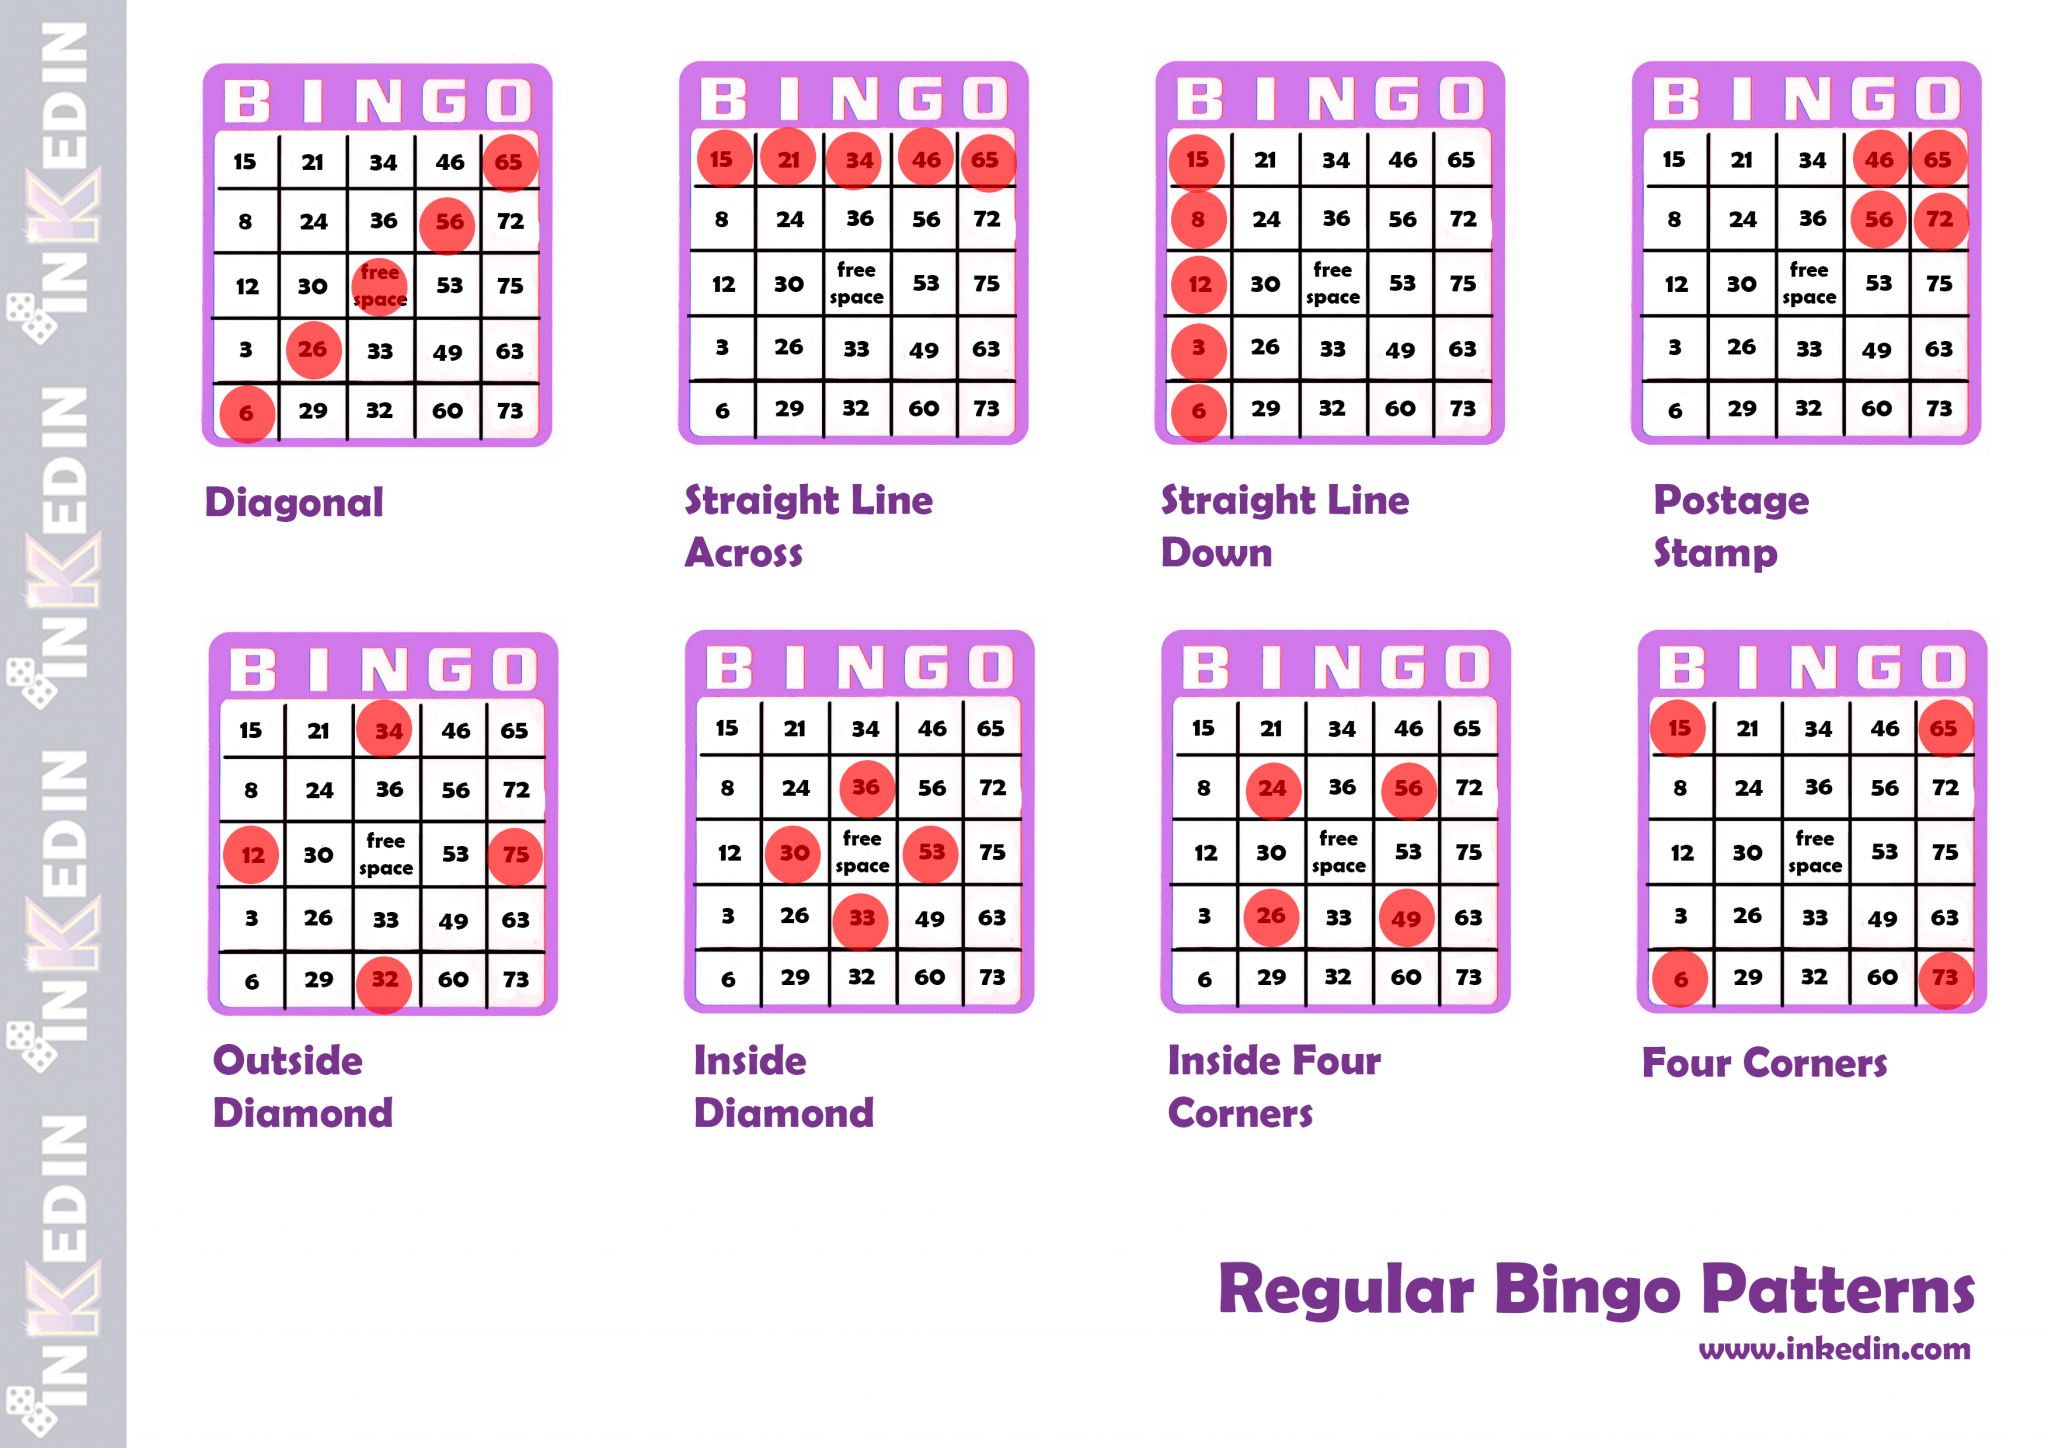 2021-office-bingo-wall-calendar-12x12-in-2021-office-bingo-bingo